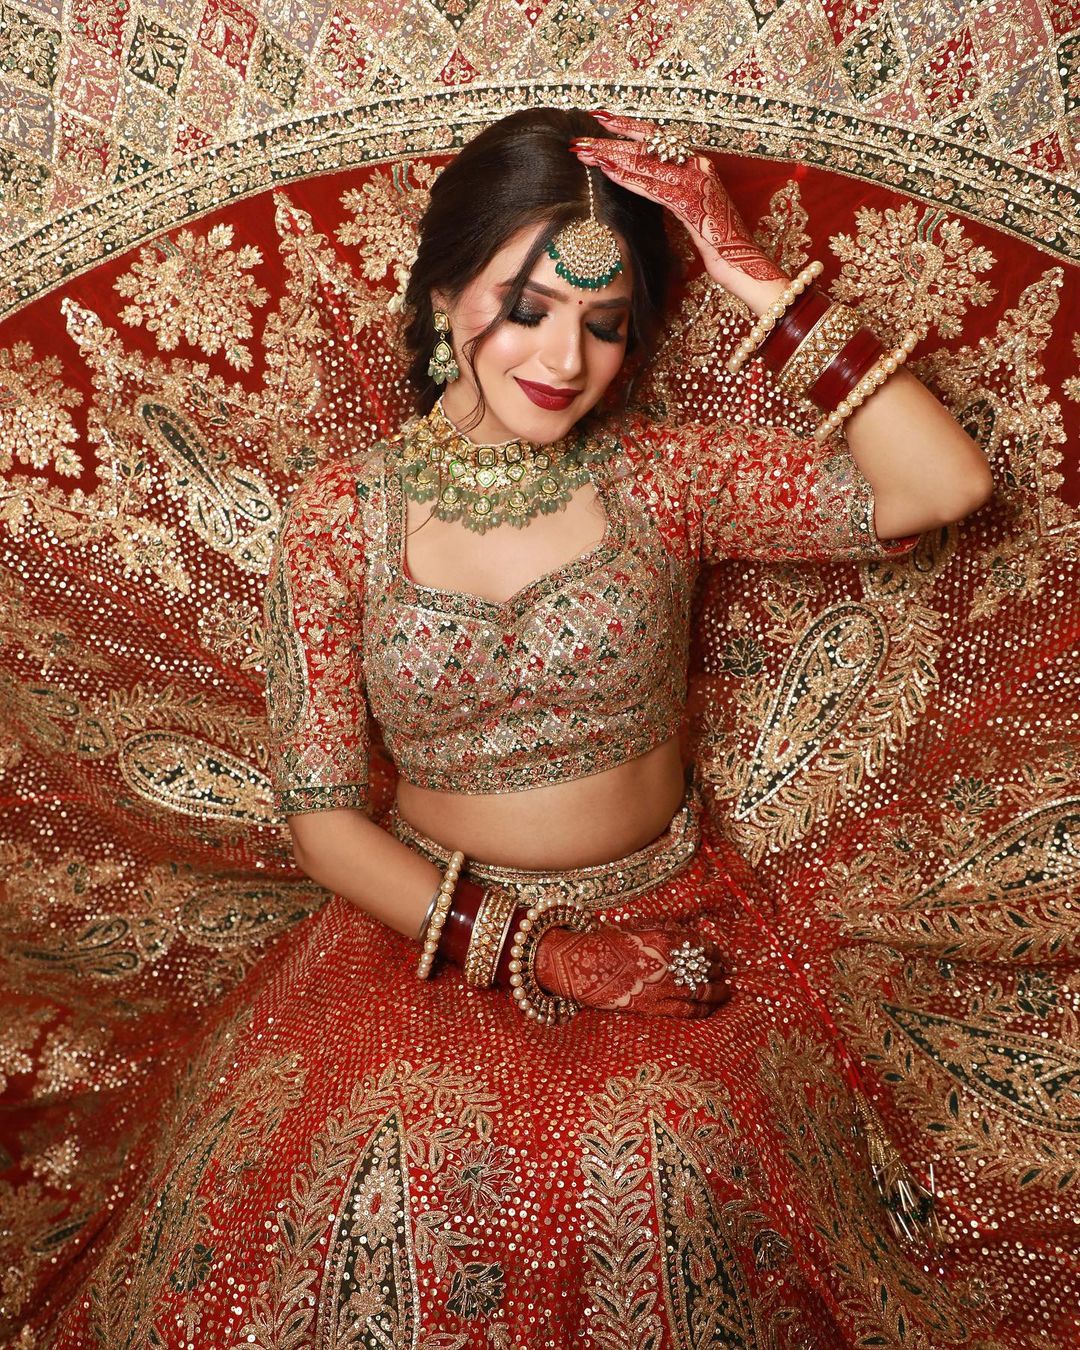 Royal Indian Bridal Dress in Red Lehenga Choli Style – Nameera by Farooq